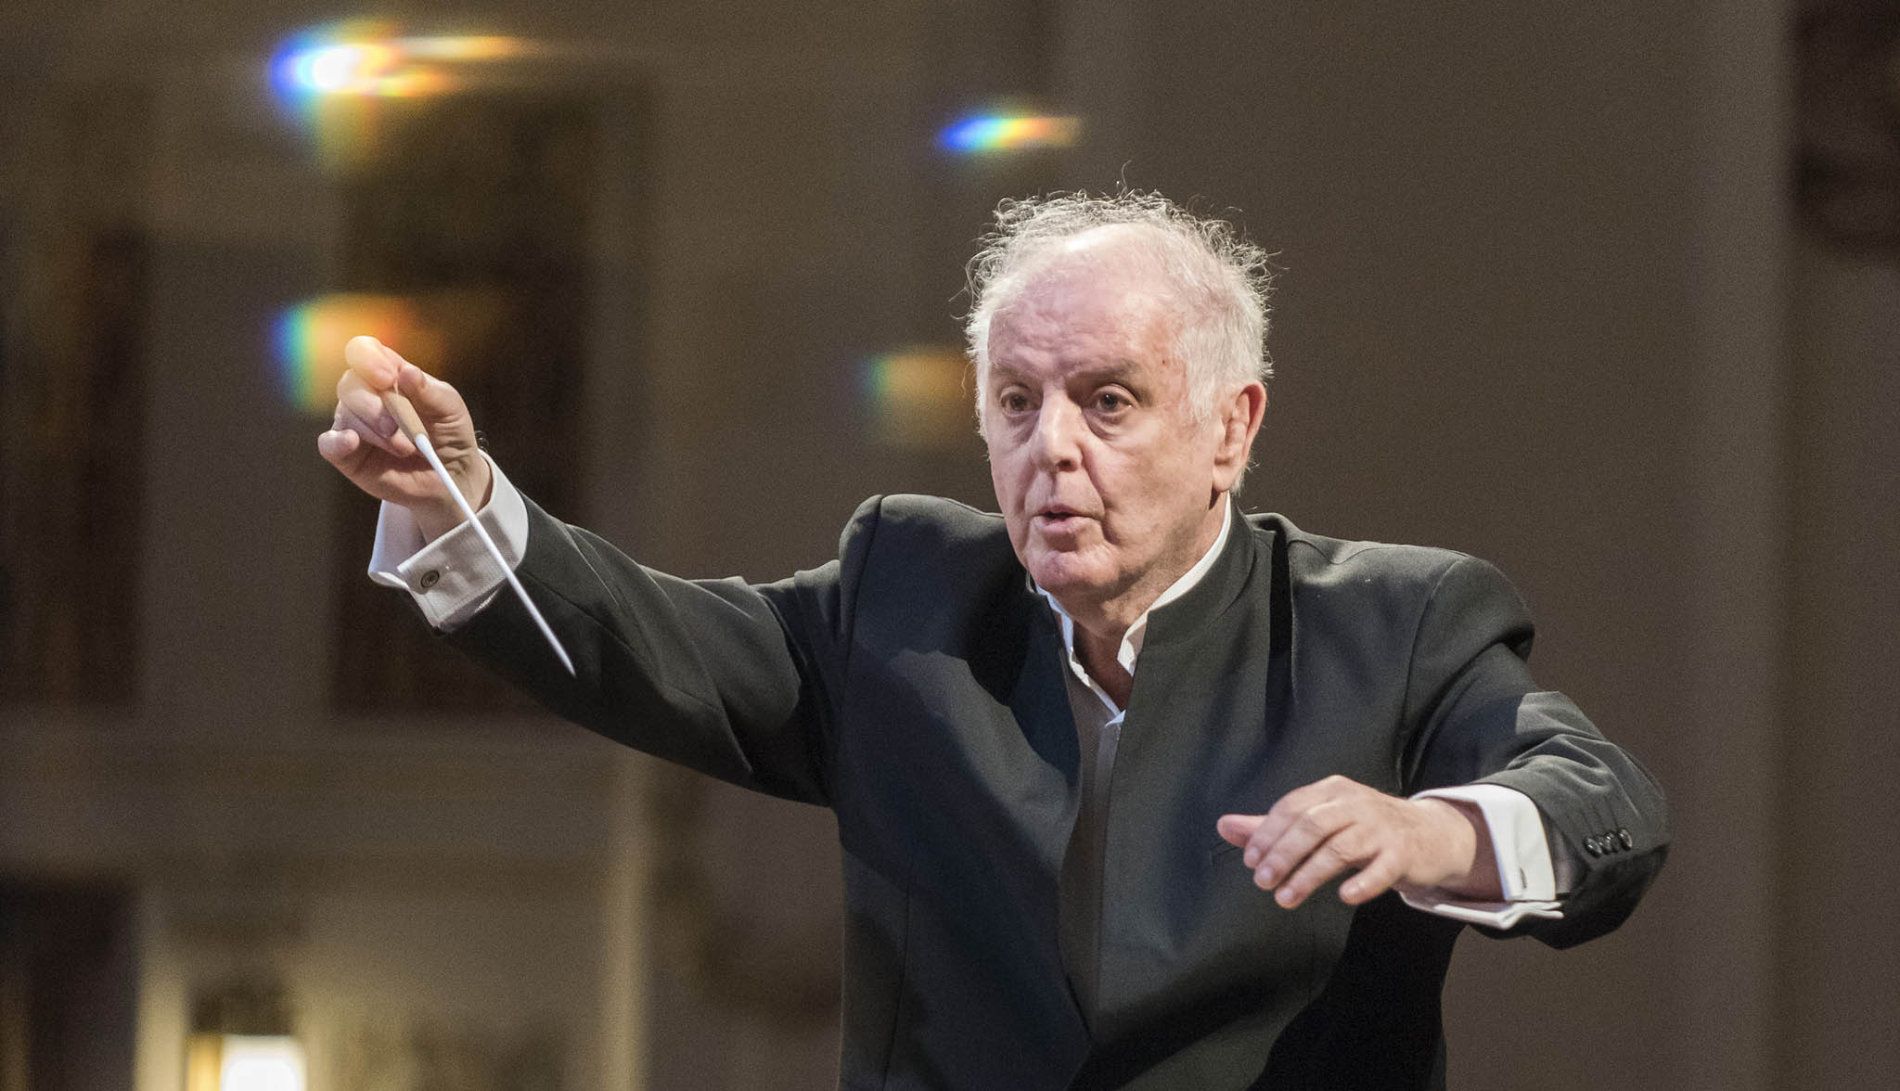 Conductor Barenboim cancels tour due to health, Prague Spring won’t start